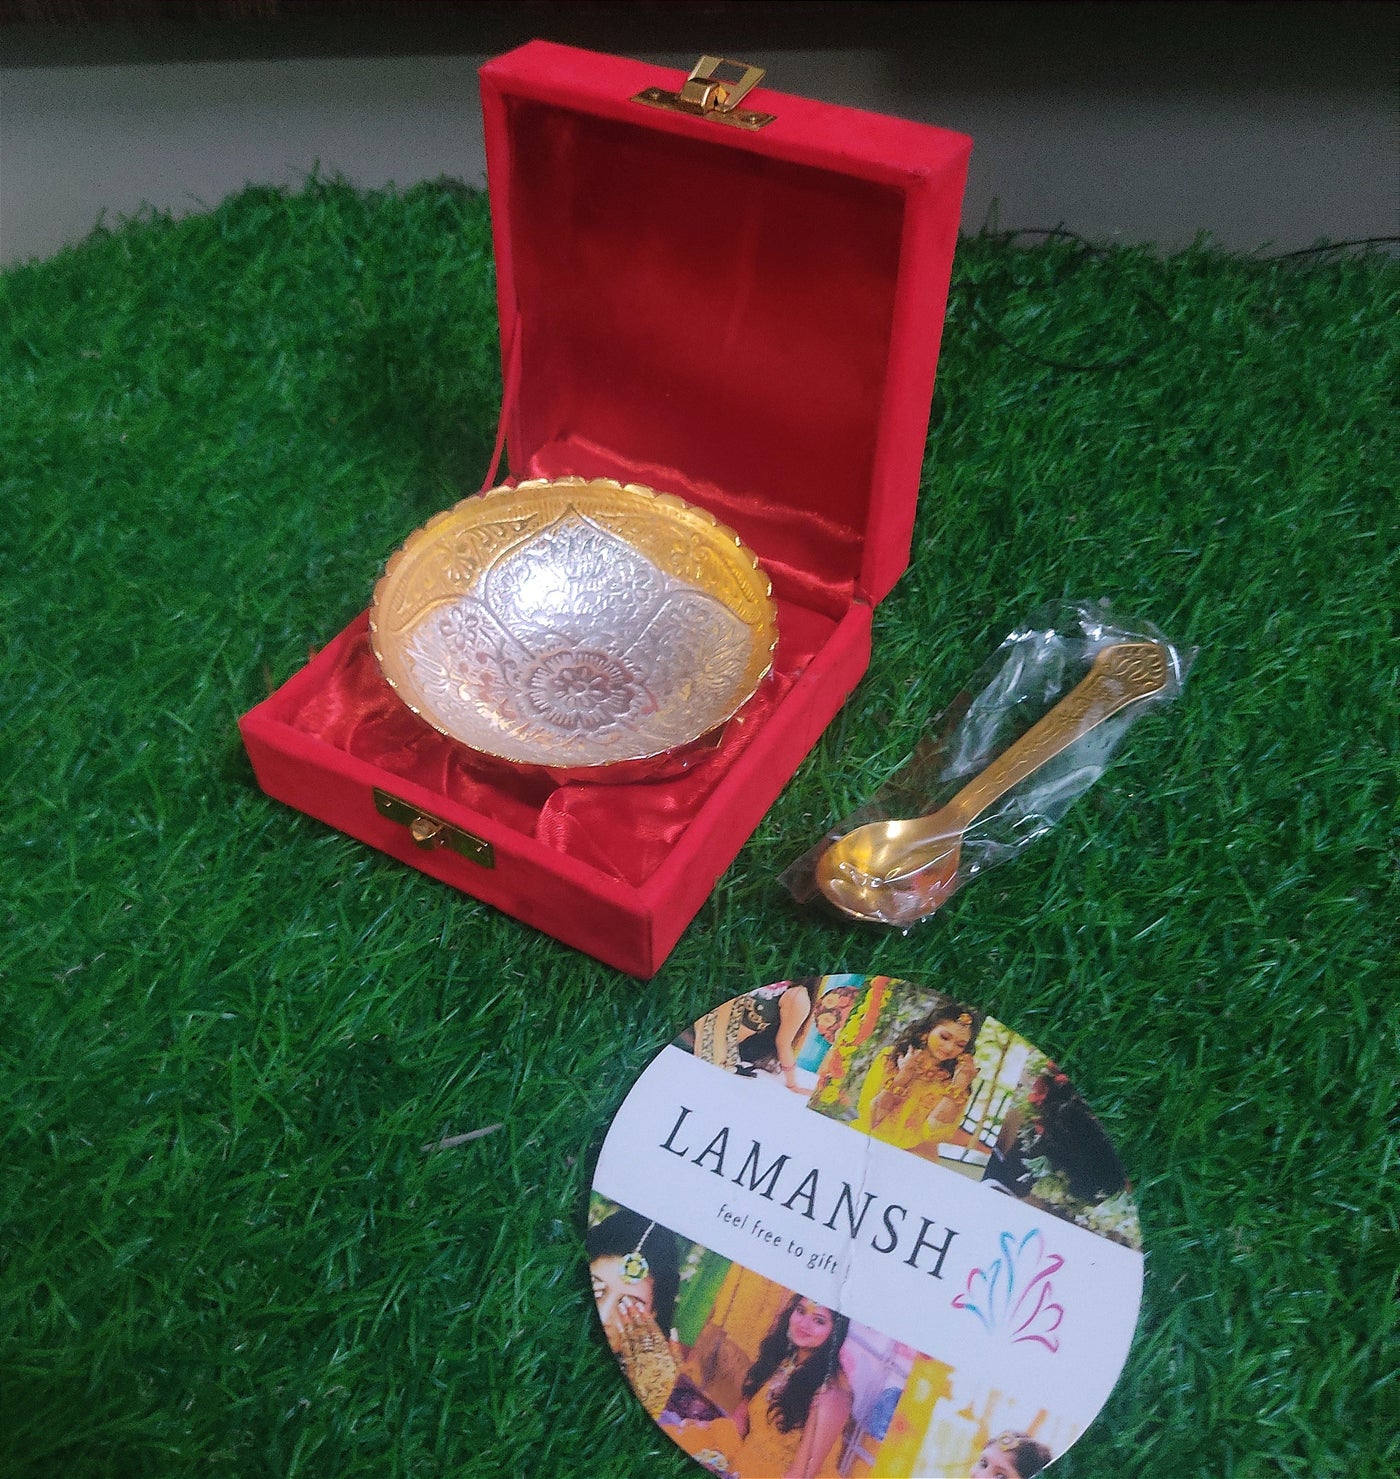 Lamansh silver bowl sets ( BULK ) LAMANSH® Golden Silver Plated Metal Bowl set for Gifting 🎁 | German Silver Bowl set in velvet box for Wedding favours